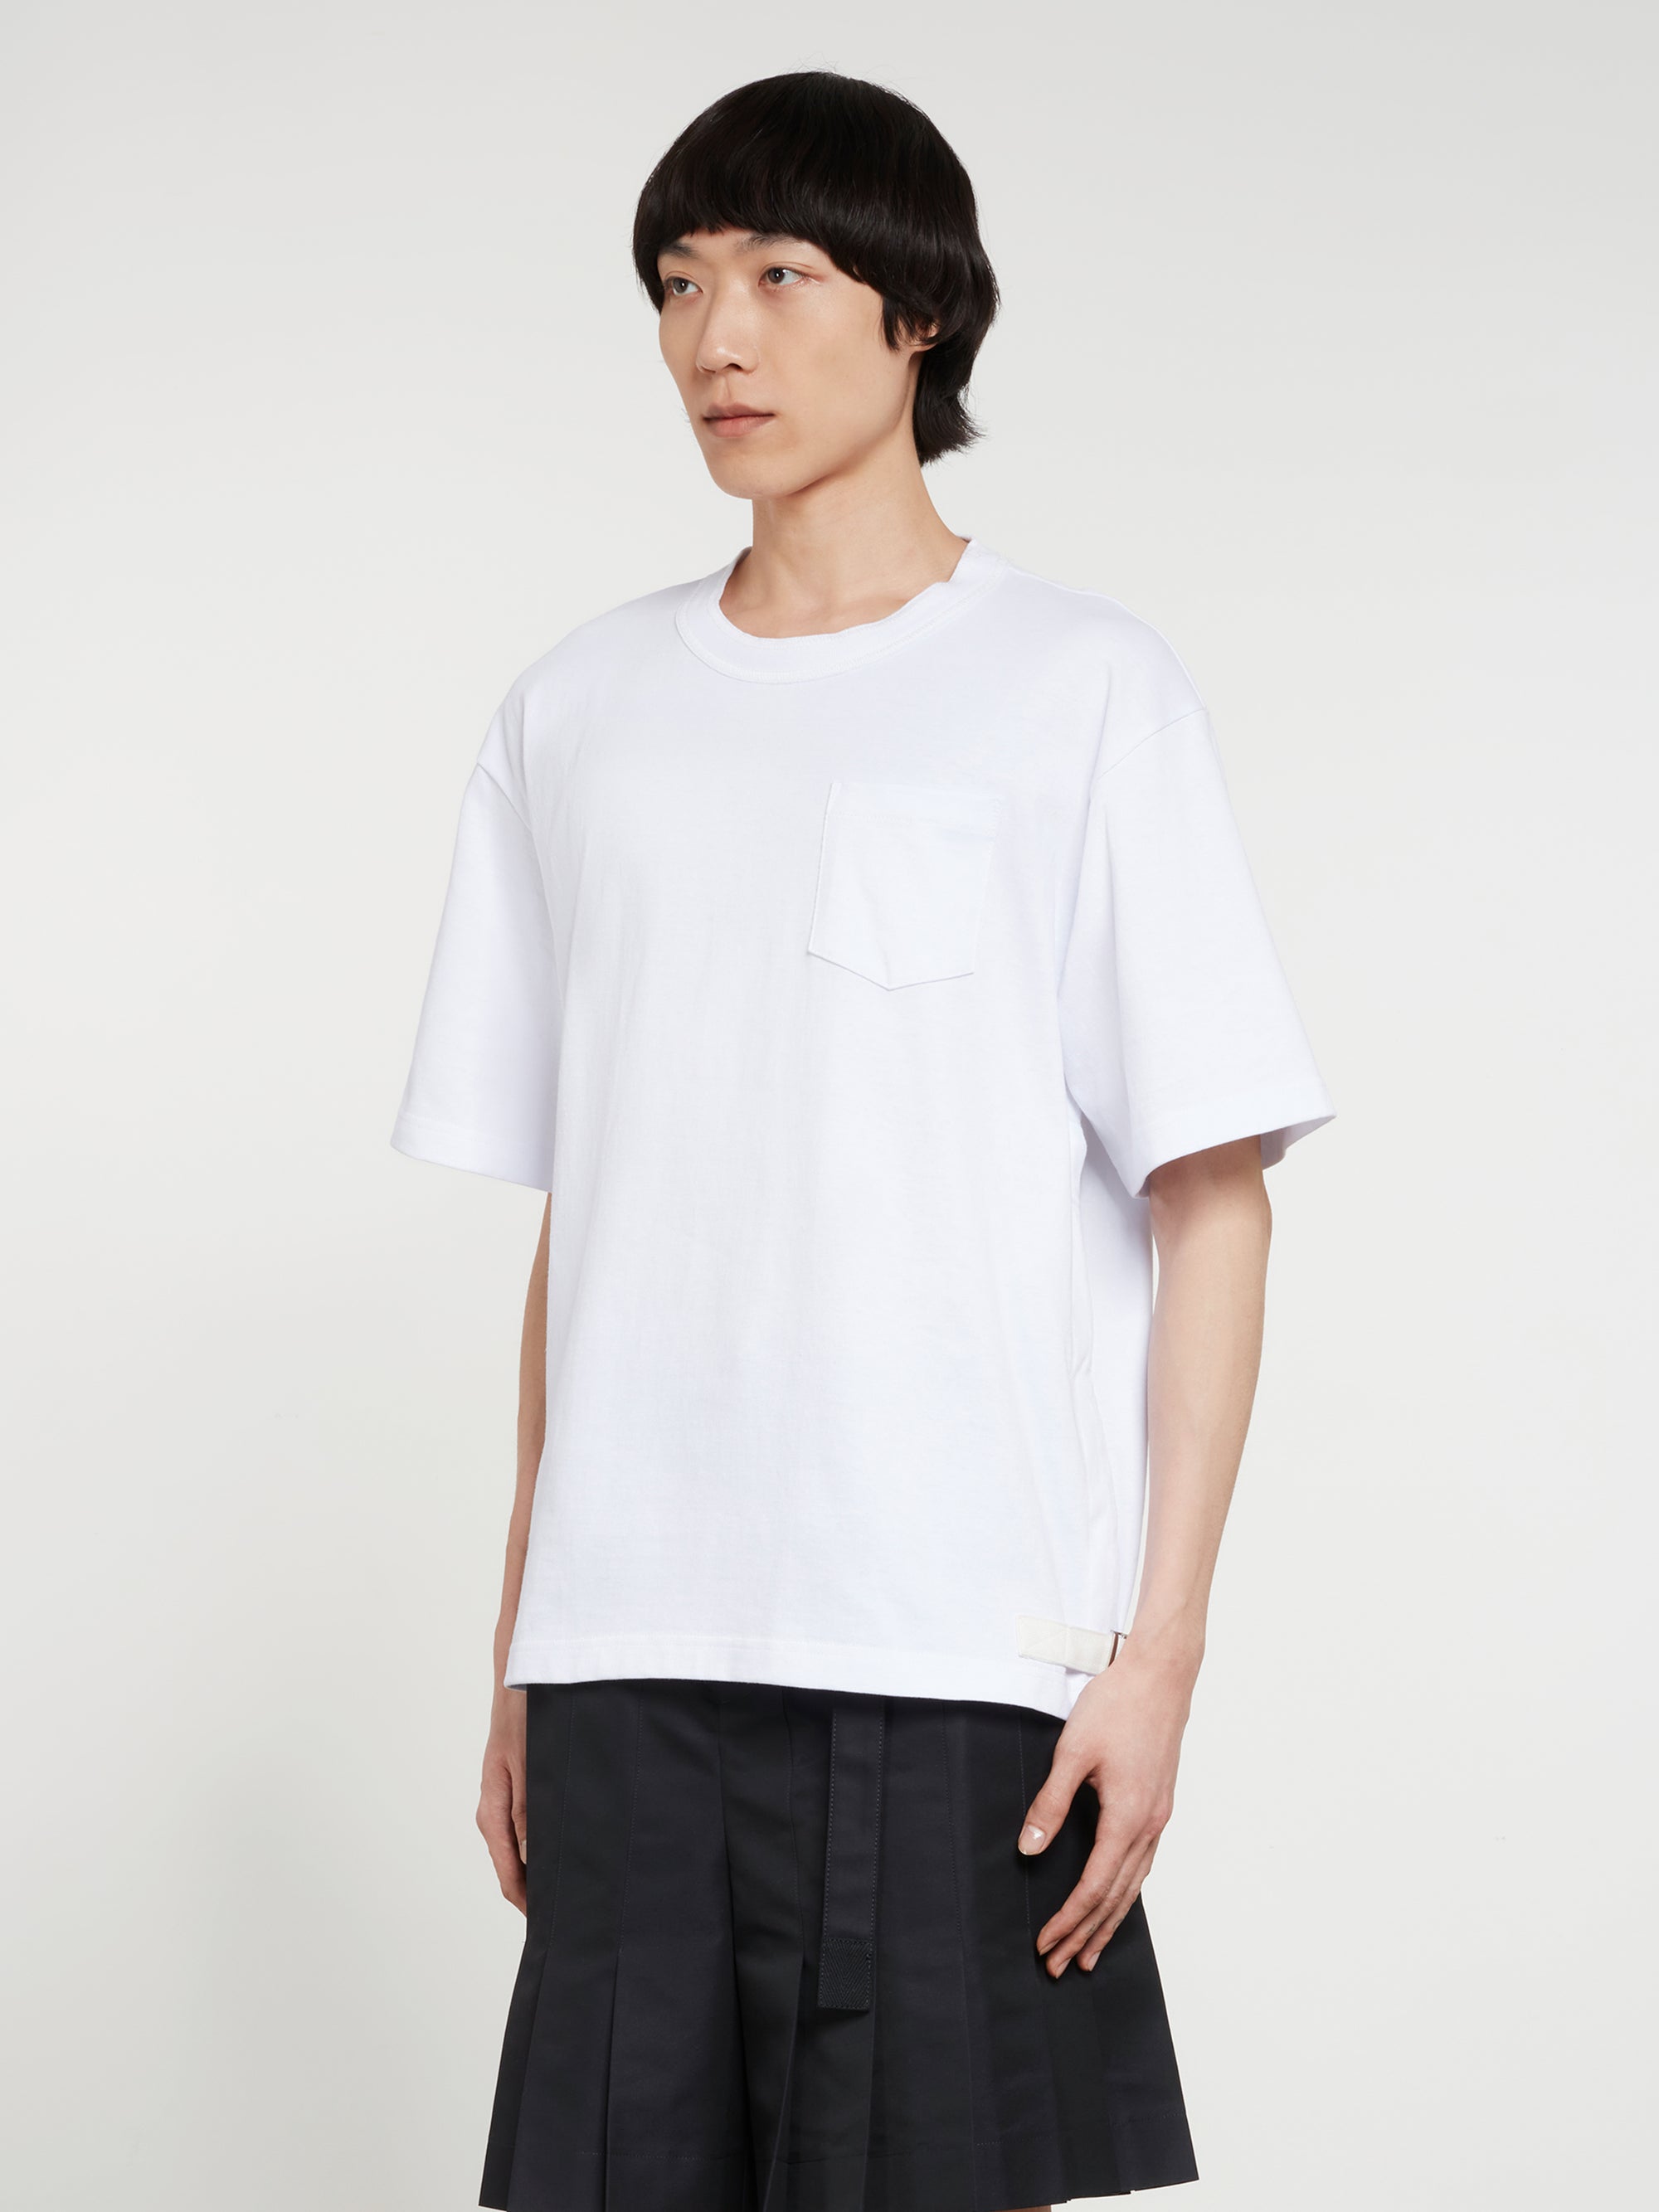 Sacai - Men’s Nylon Twill Cotton Jersey T-shirt - (Off White) view 2